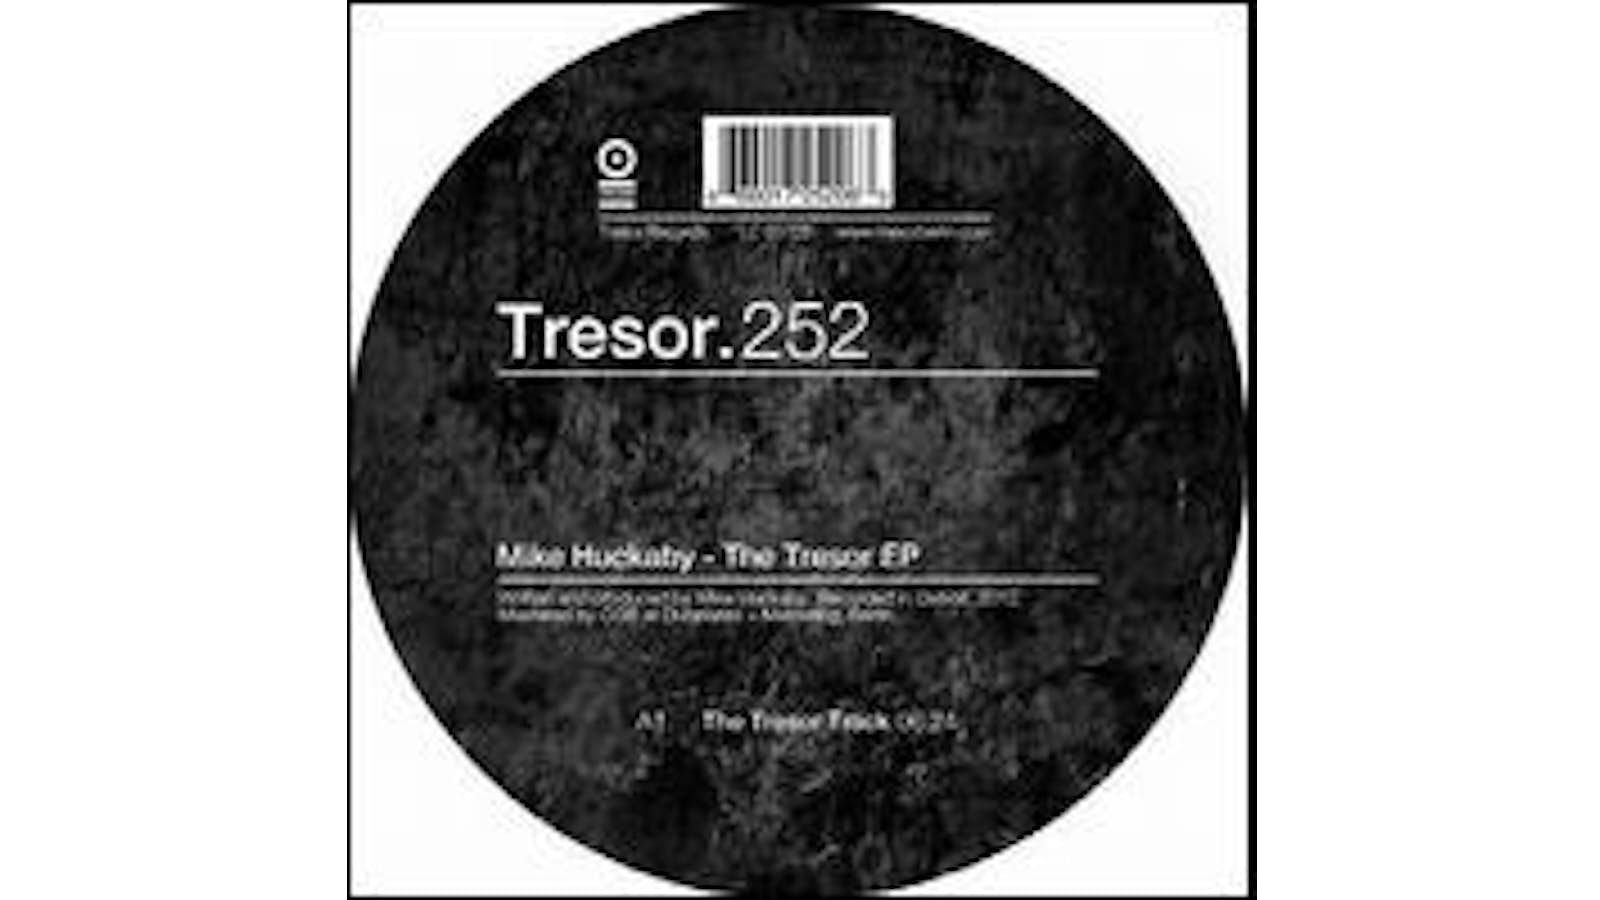 The Tresor EP, Mike Huckaby